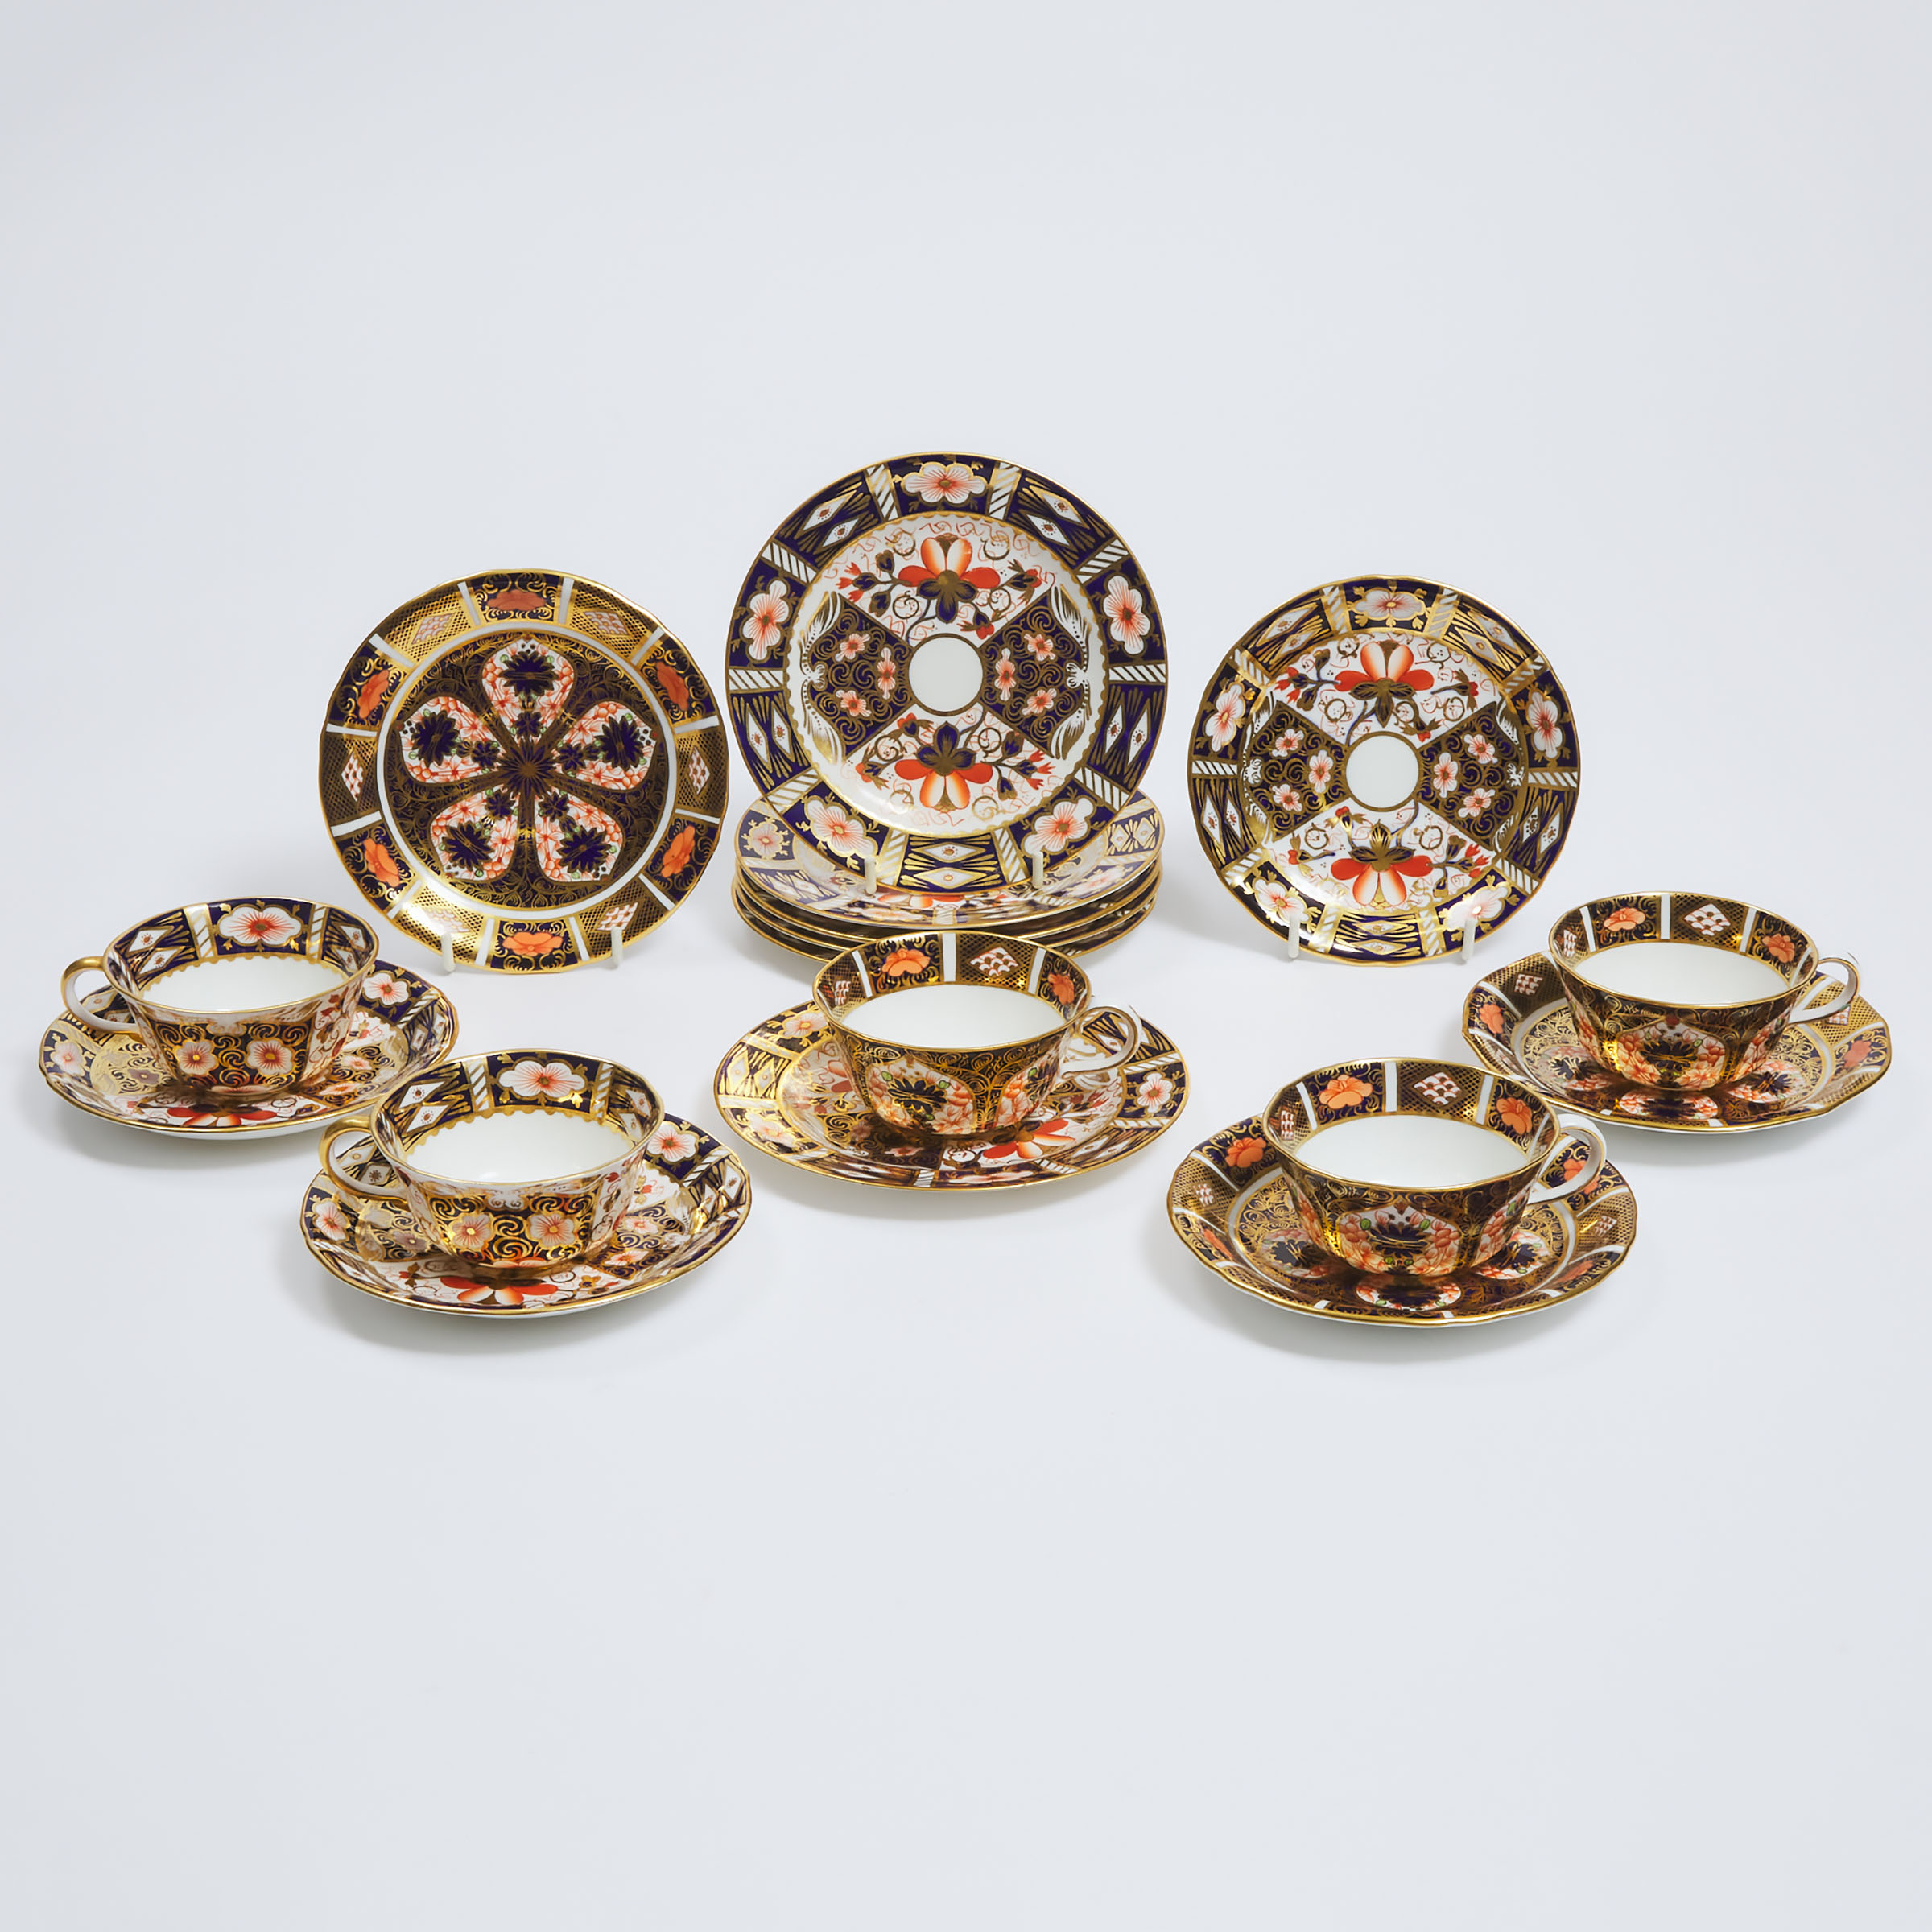 Royal Crown Derby 'Imari' (1128 and 2451) Pattern Tablewares, 20th century